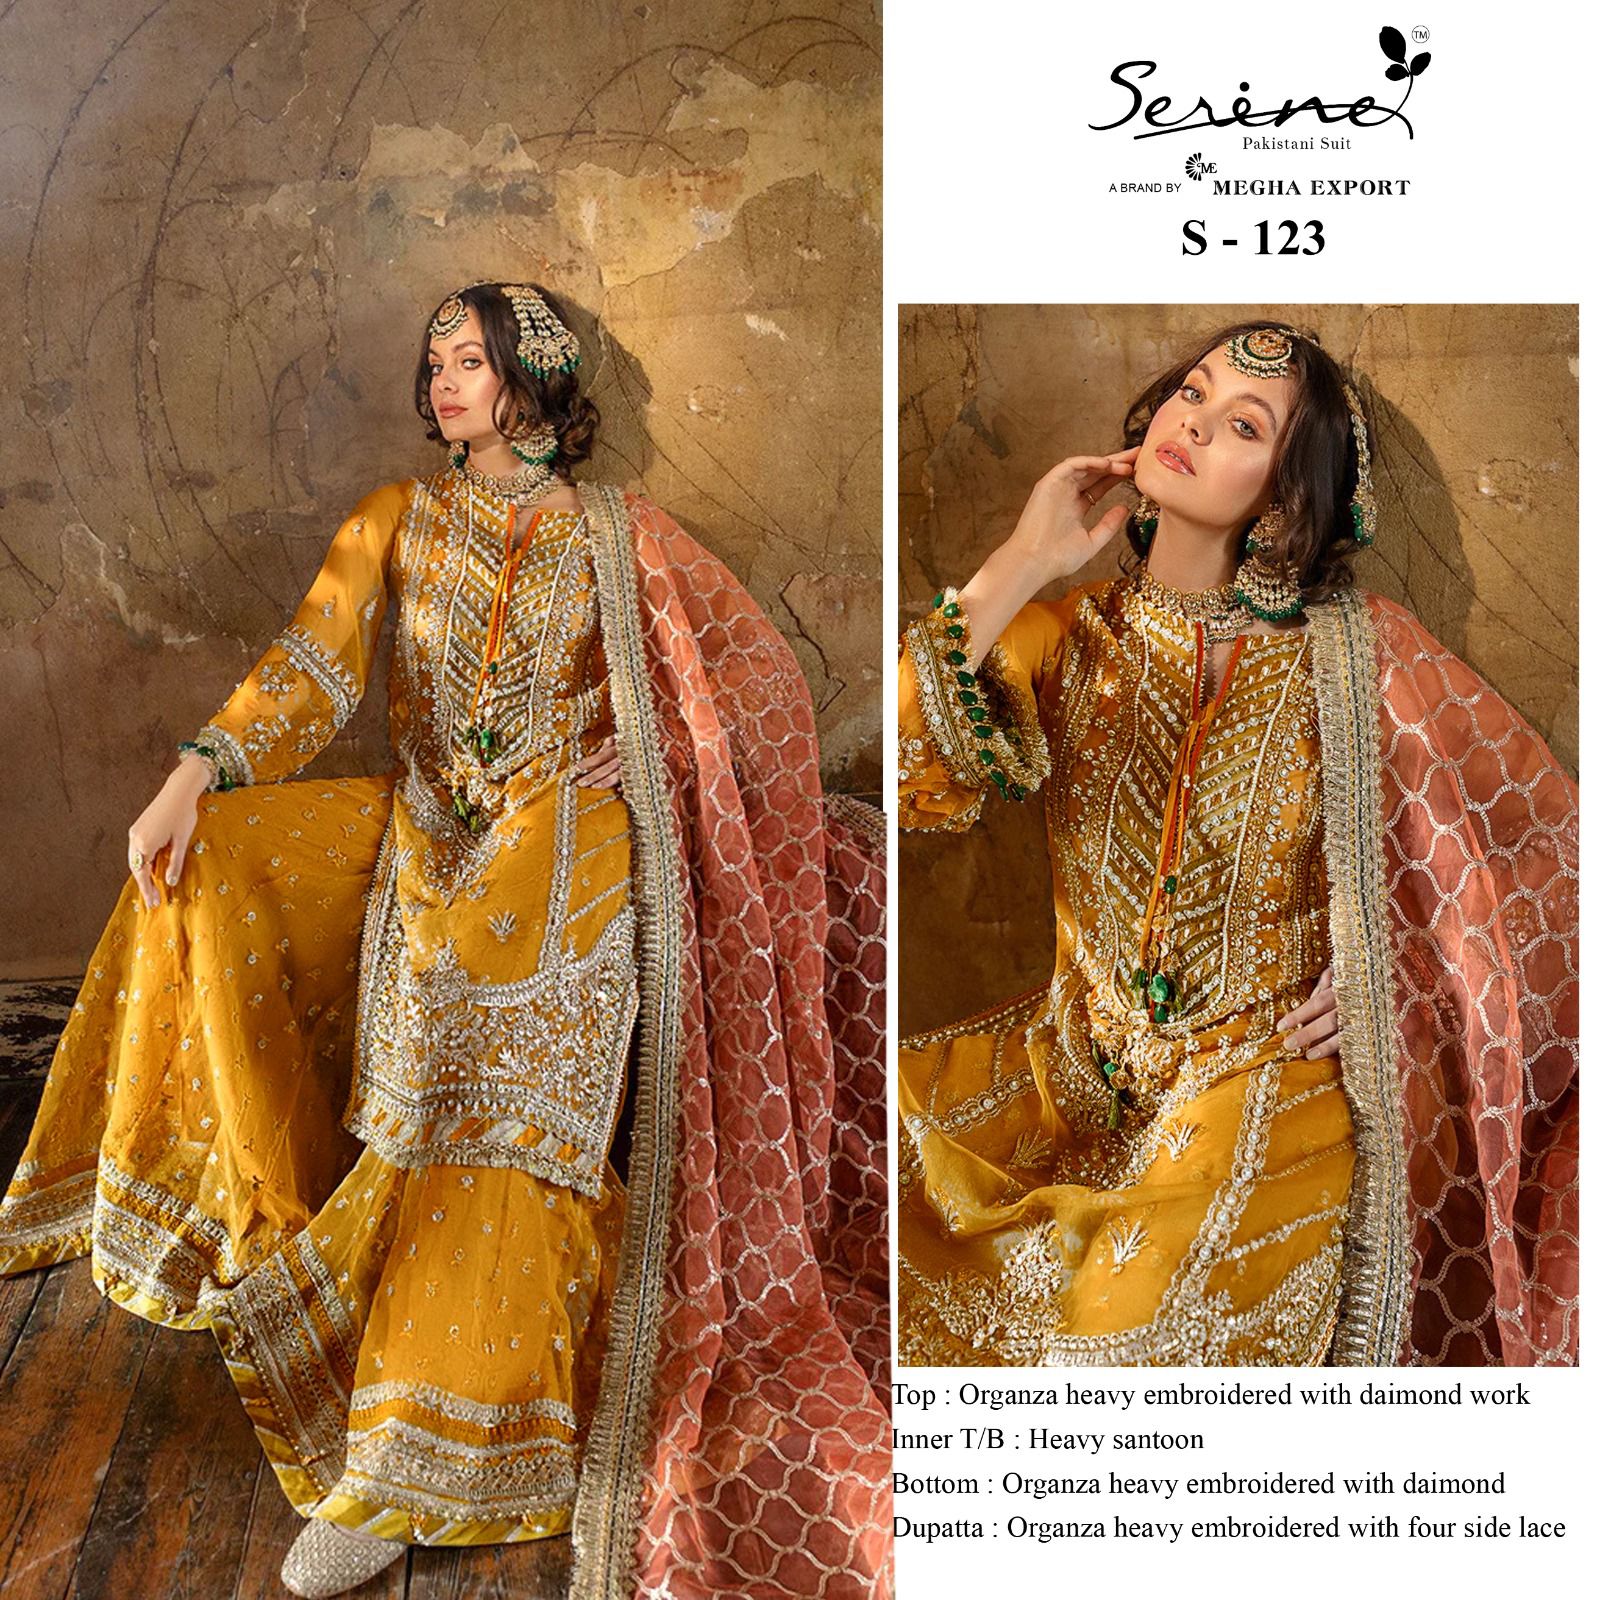 Elegant Maxi Dress Pakistani In Yellow Color #PF148 | Maxi dress, Elegant  maxi dress, Pakistani dresses